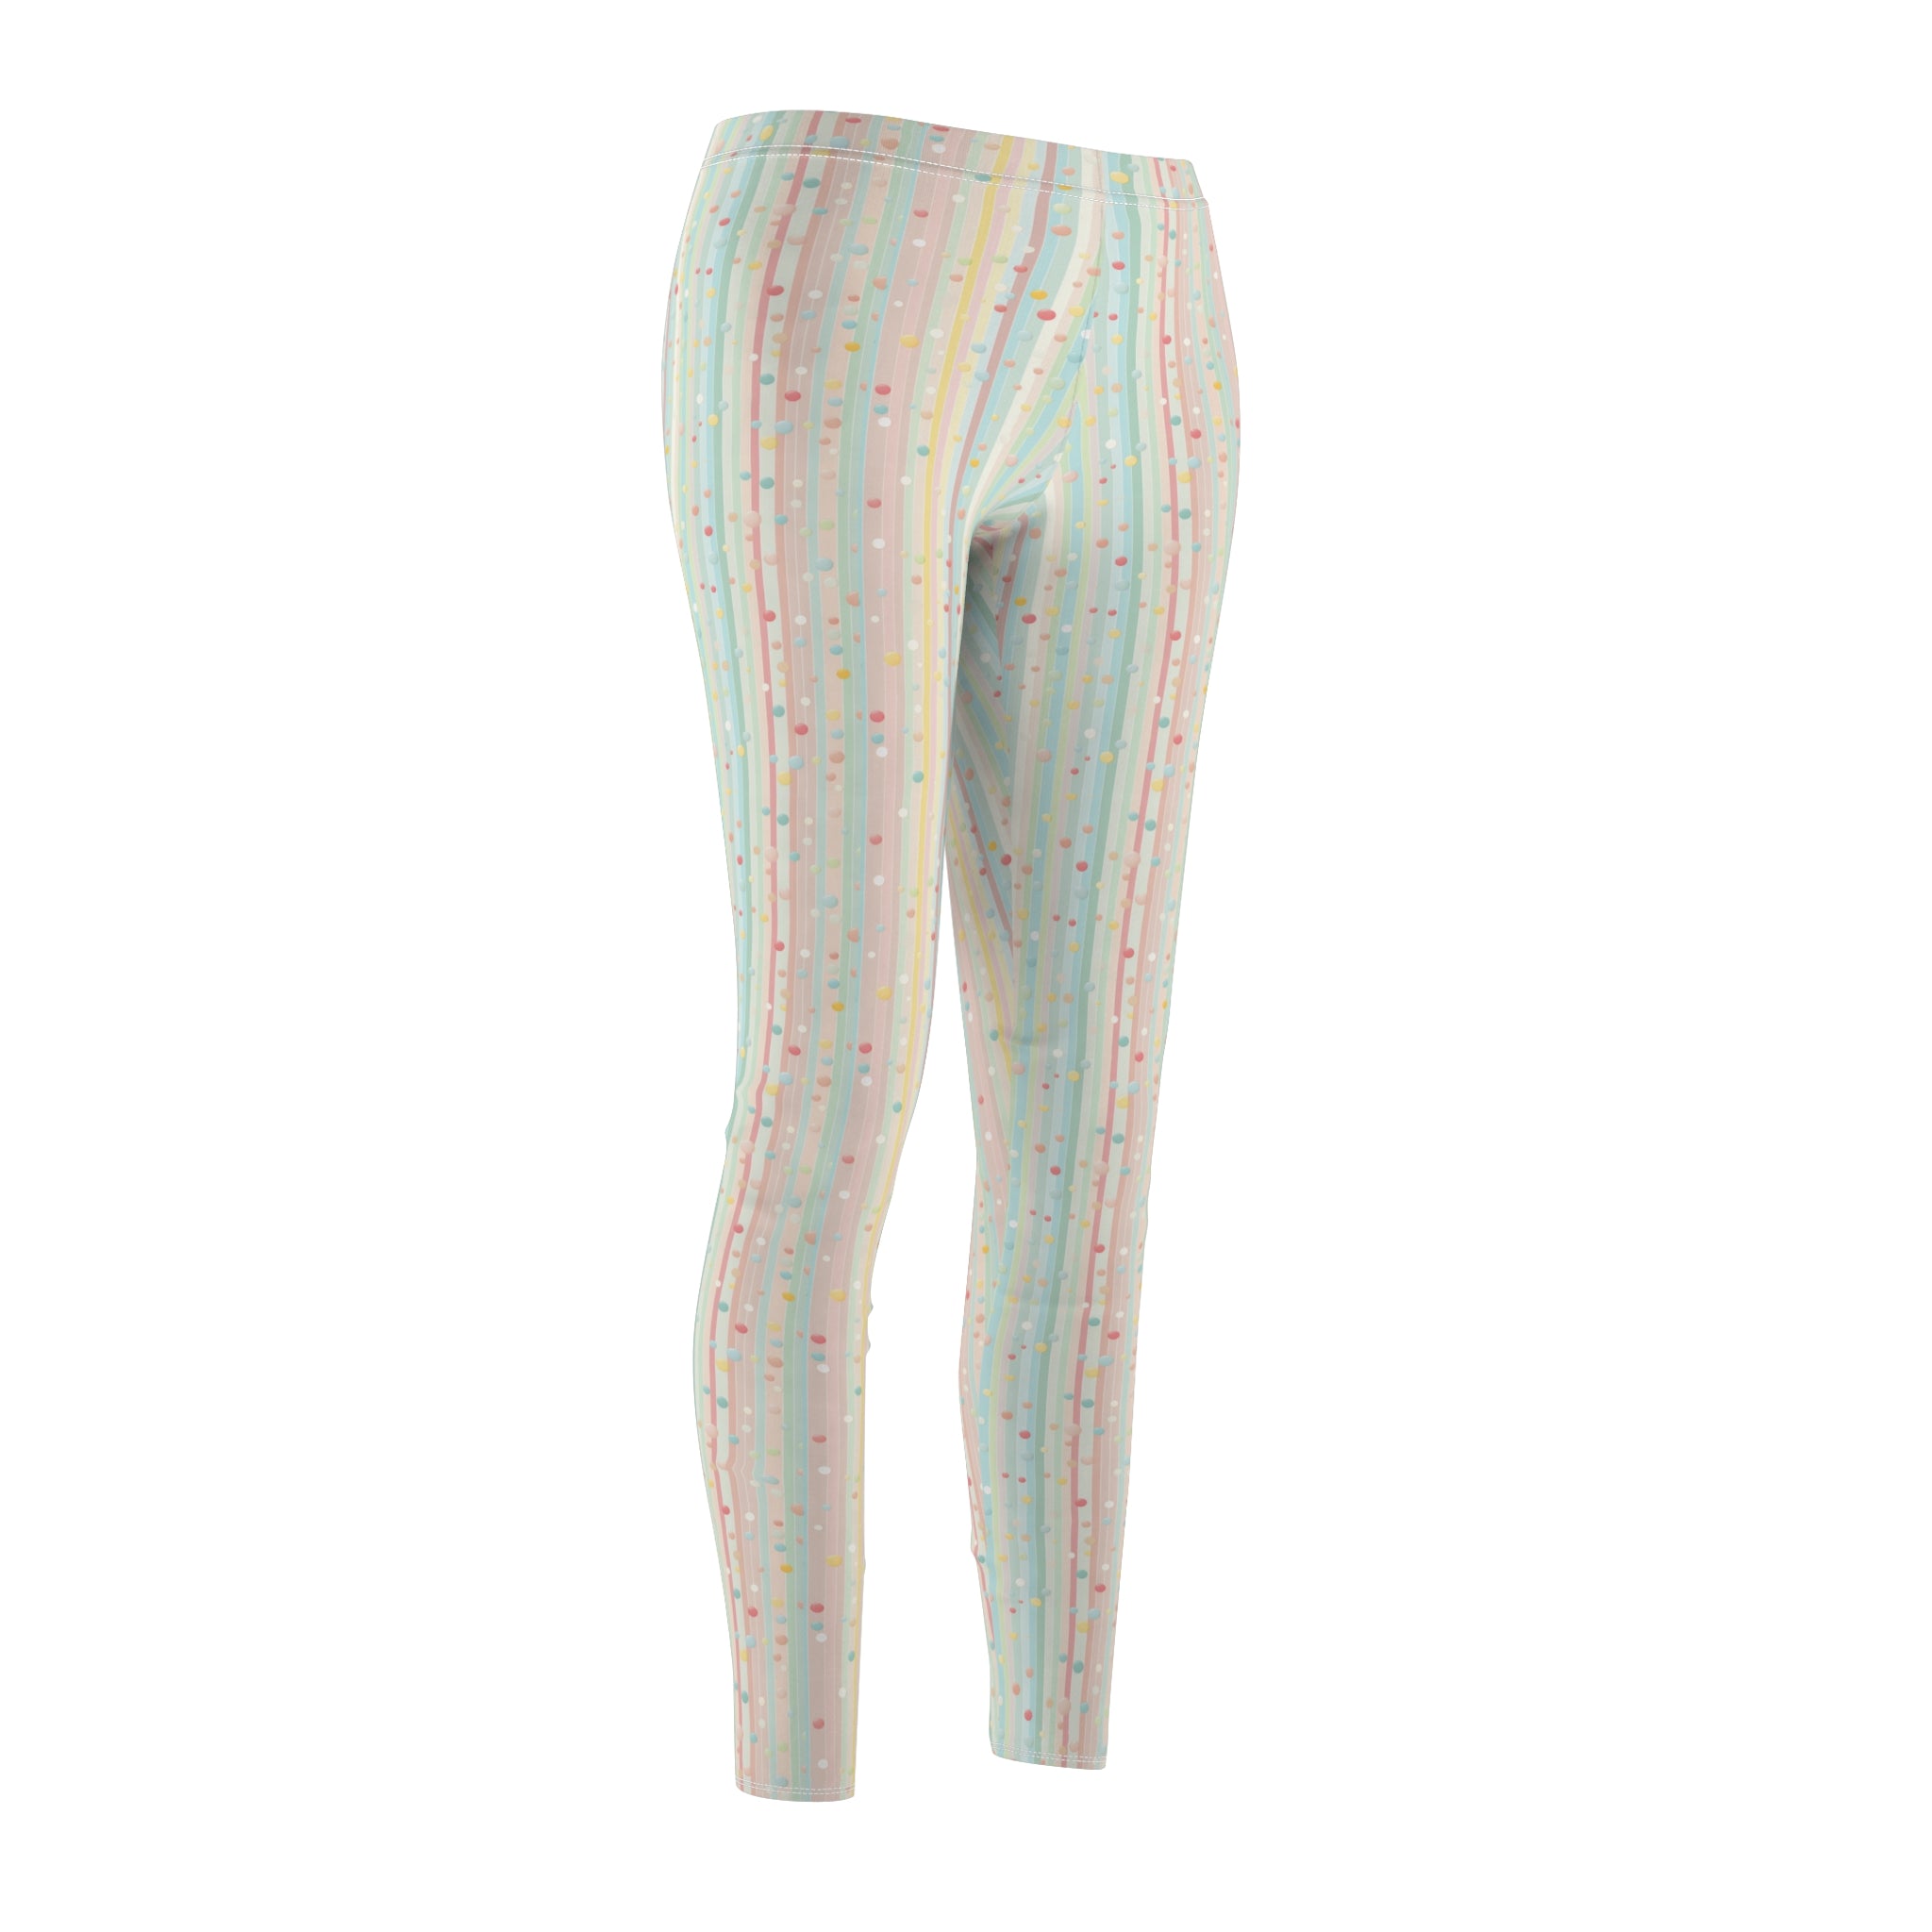 Striped Gym Leggings for Women XS-2XL - Sleek & Functional